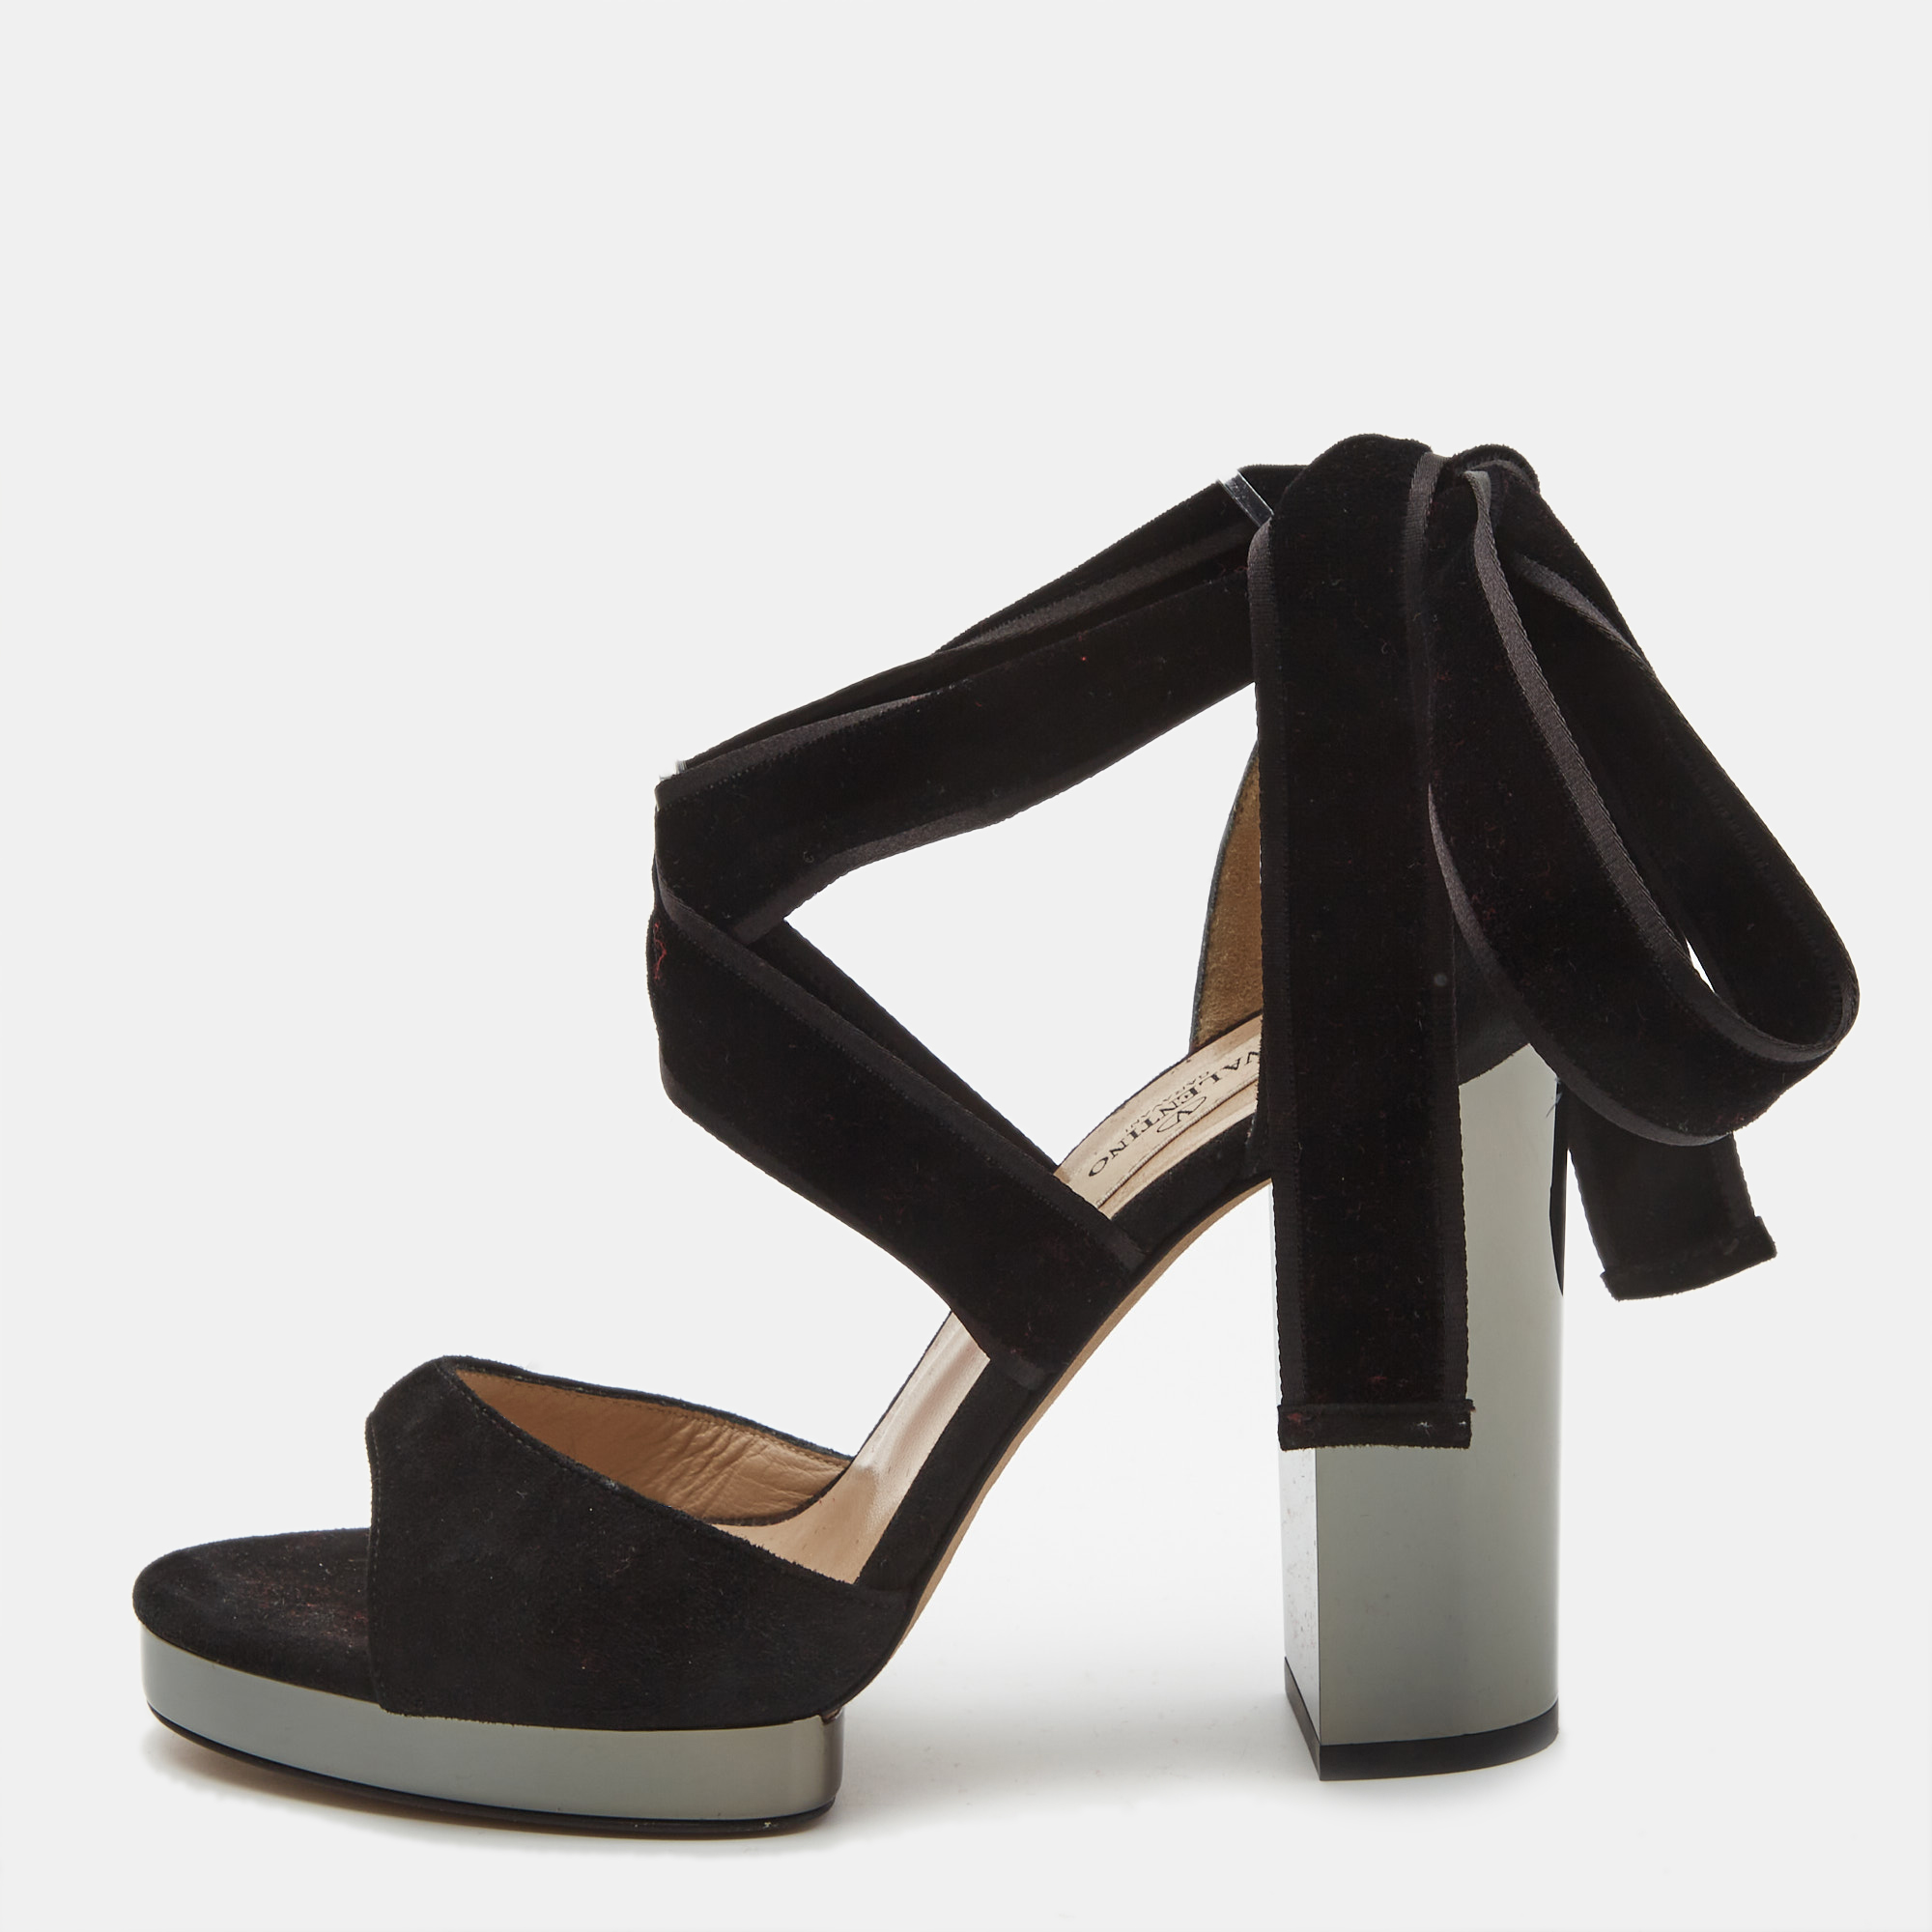 Valentino black suede platform block heel ankle strap sandals size 36